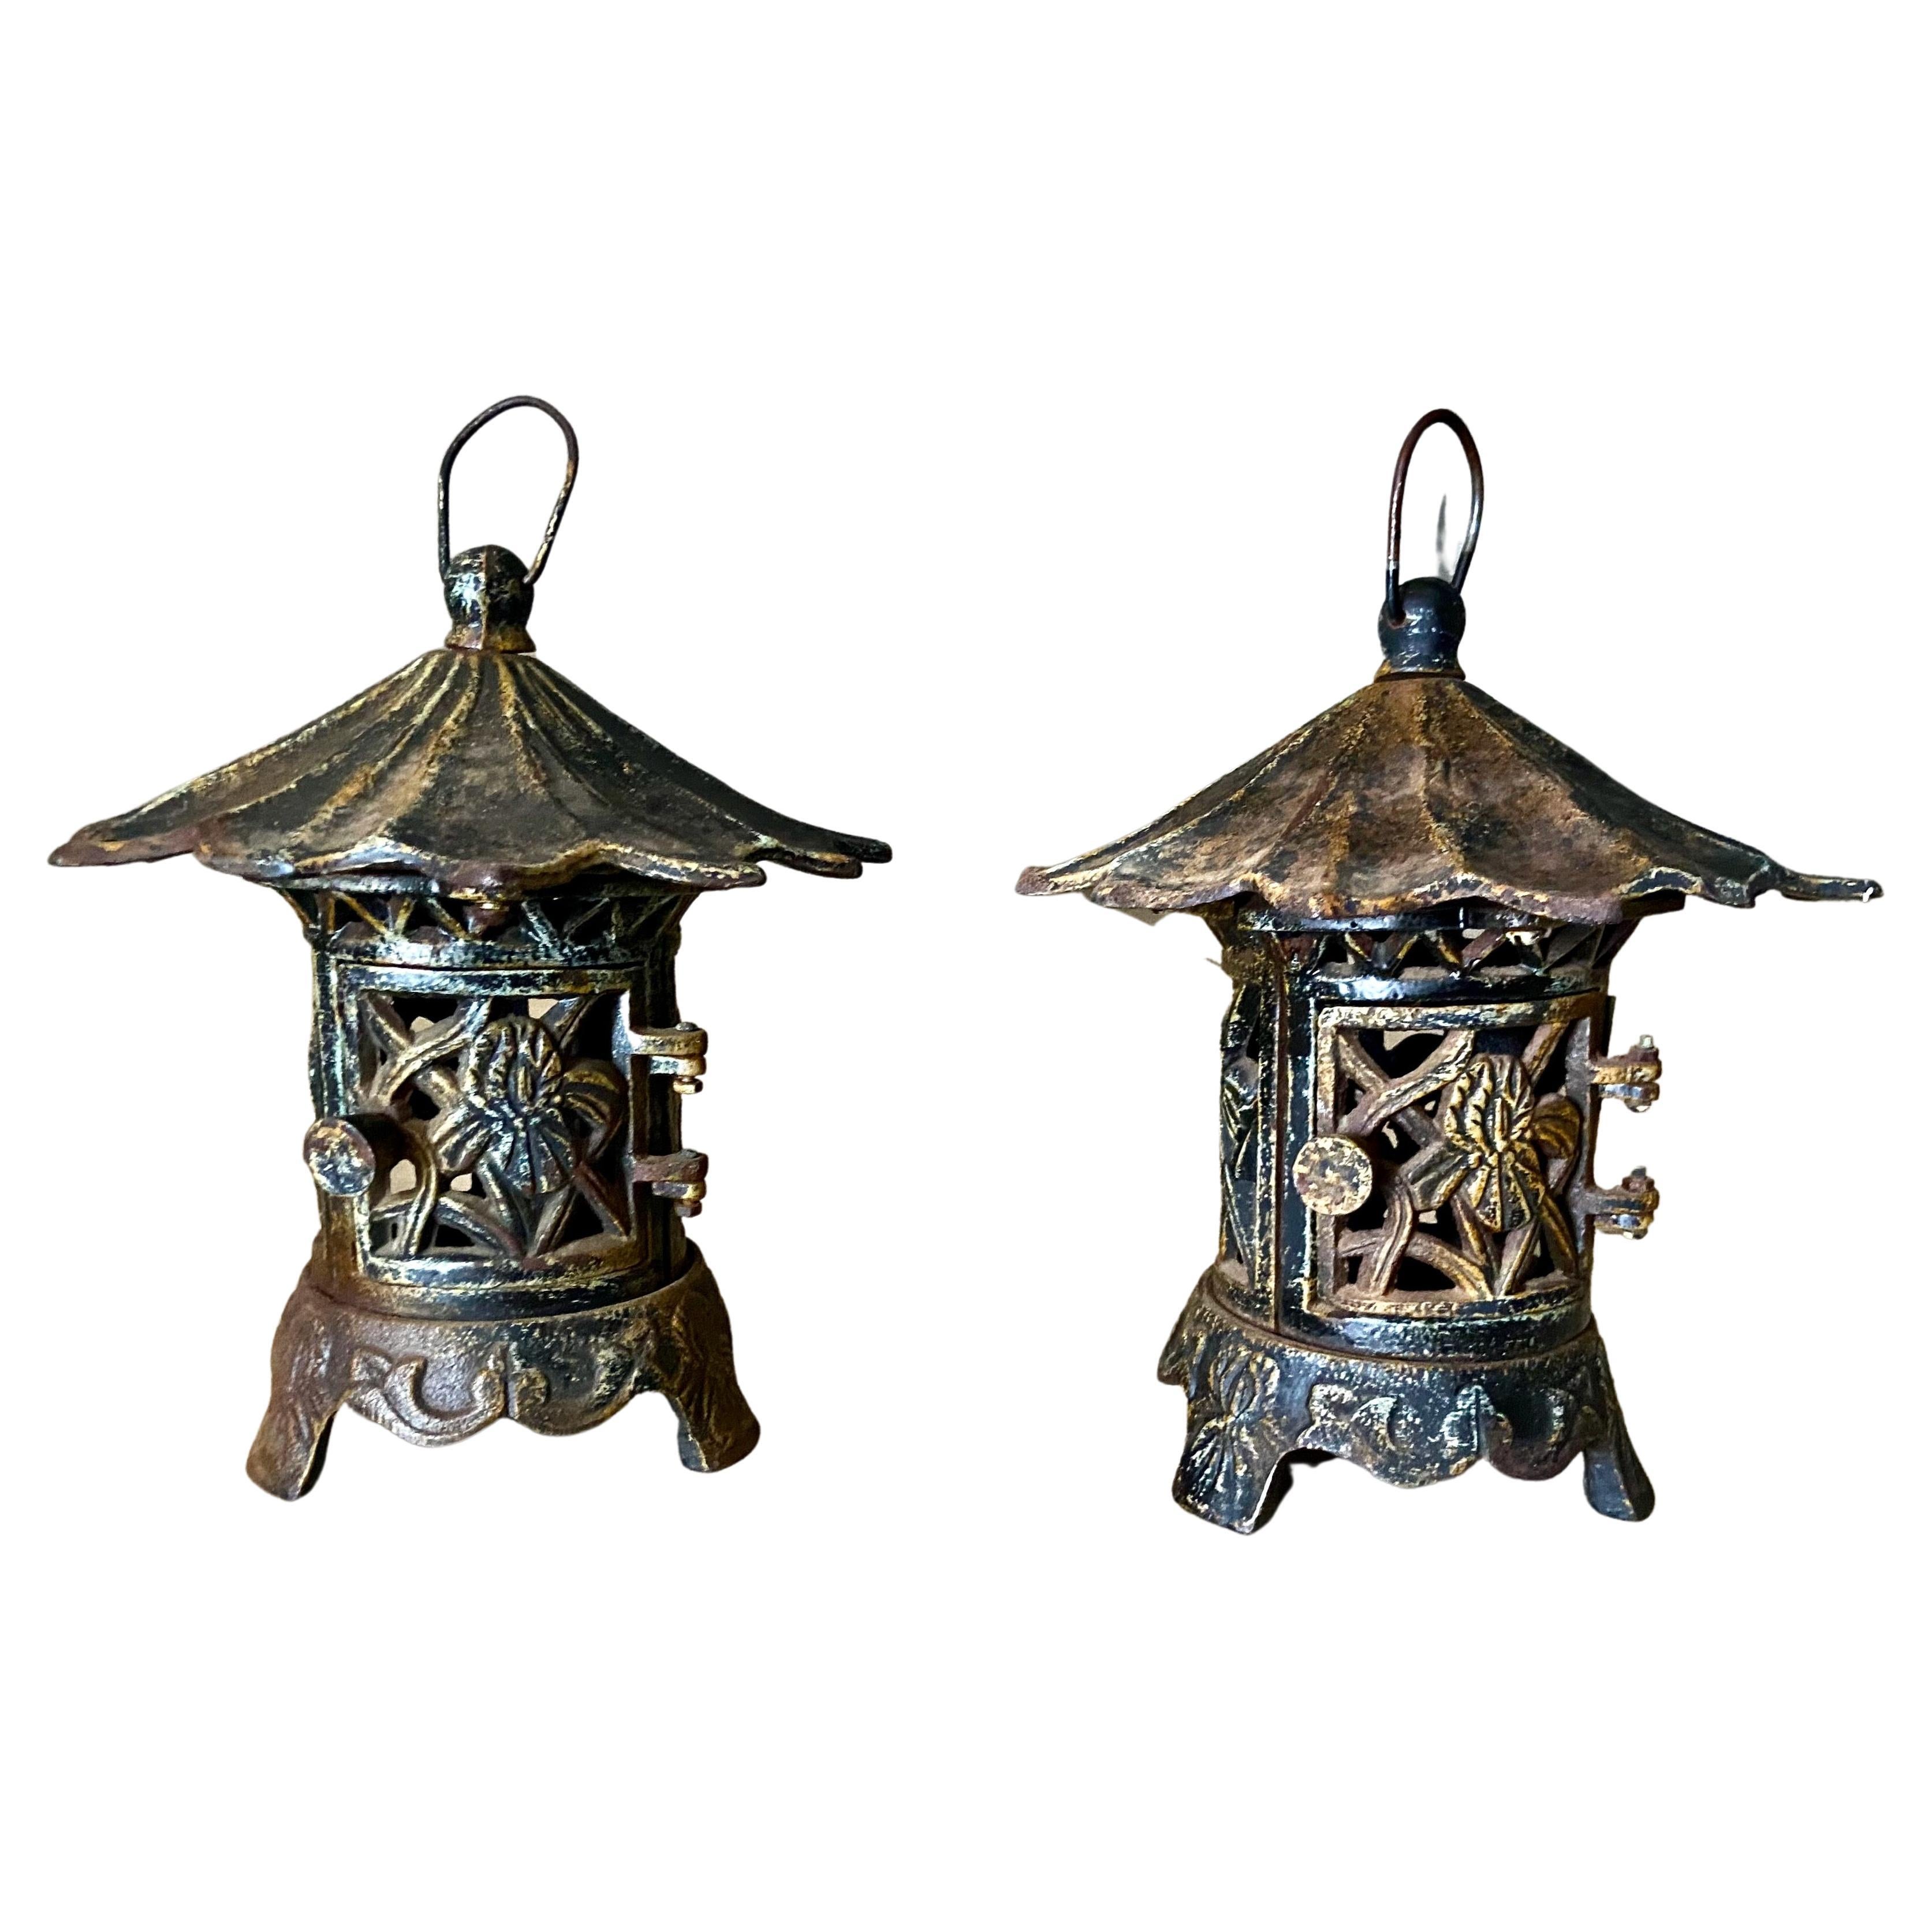 Pair Antique Chinese Iron Pagoda Garden Candle Lanterns